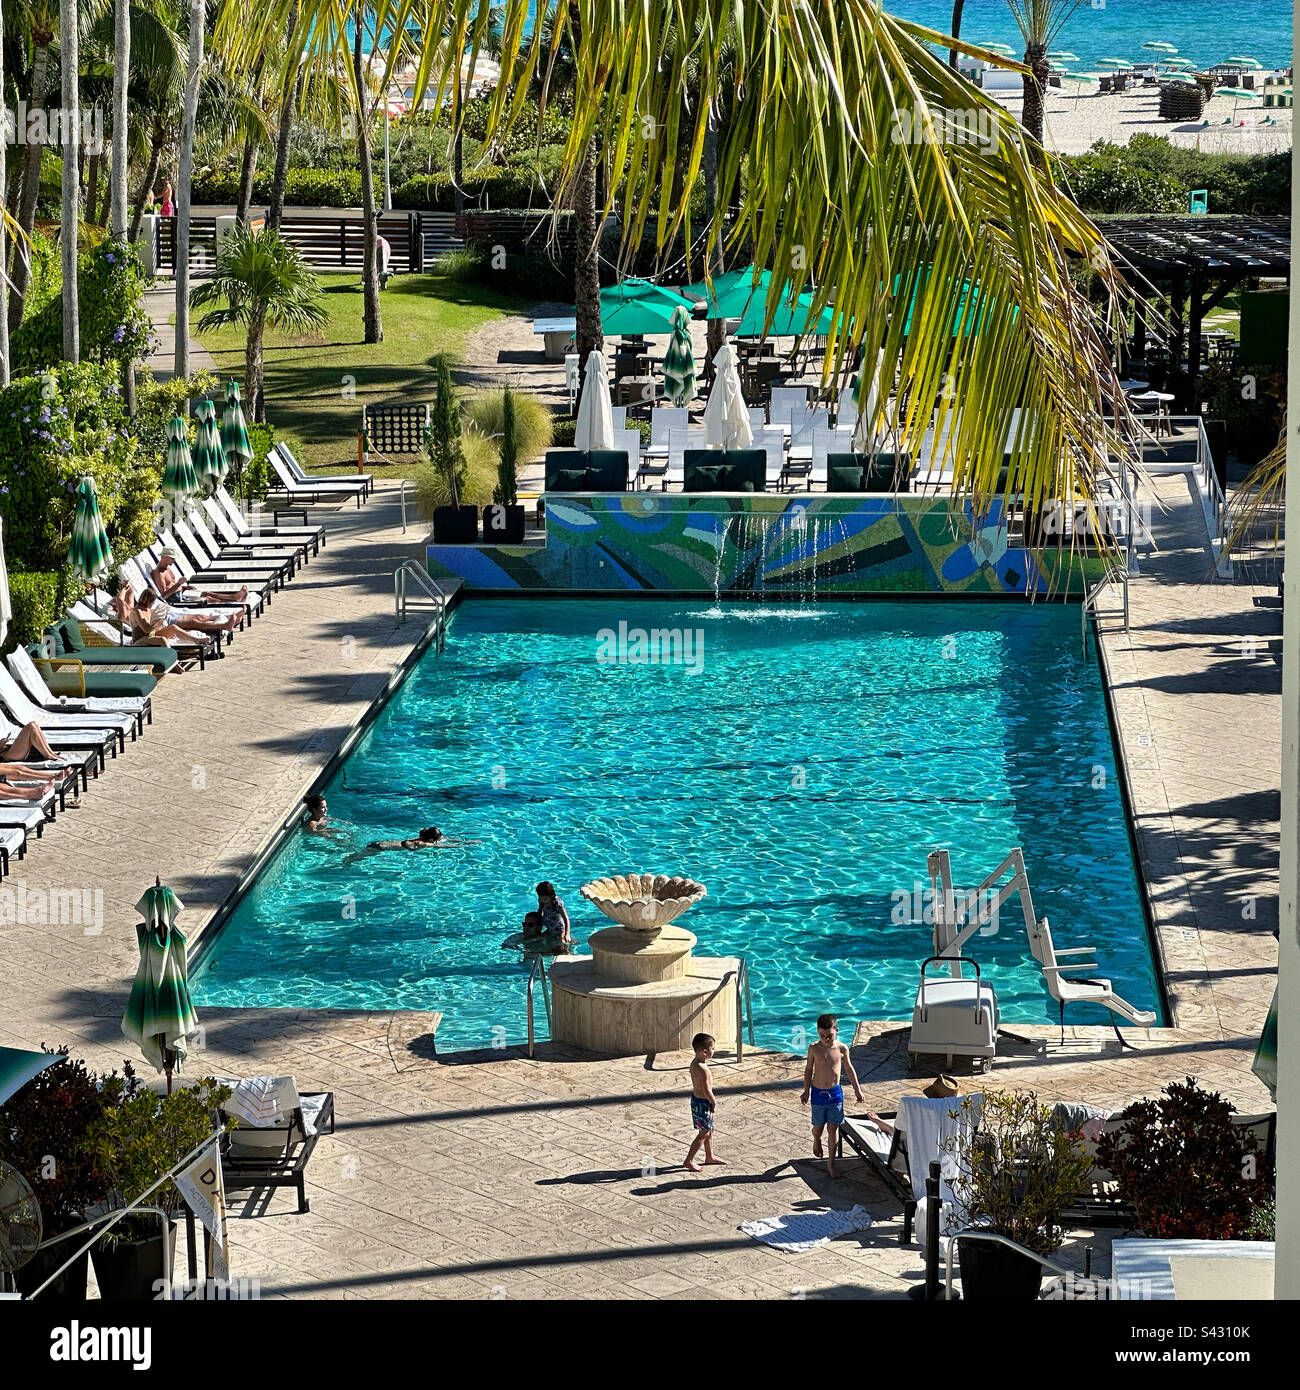 Swimming Pool Kimpton Surfcomber Hotel South Beach Miami Beach Florida United States S4310K 